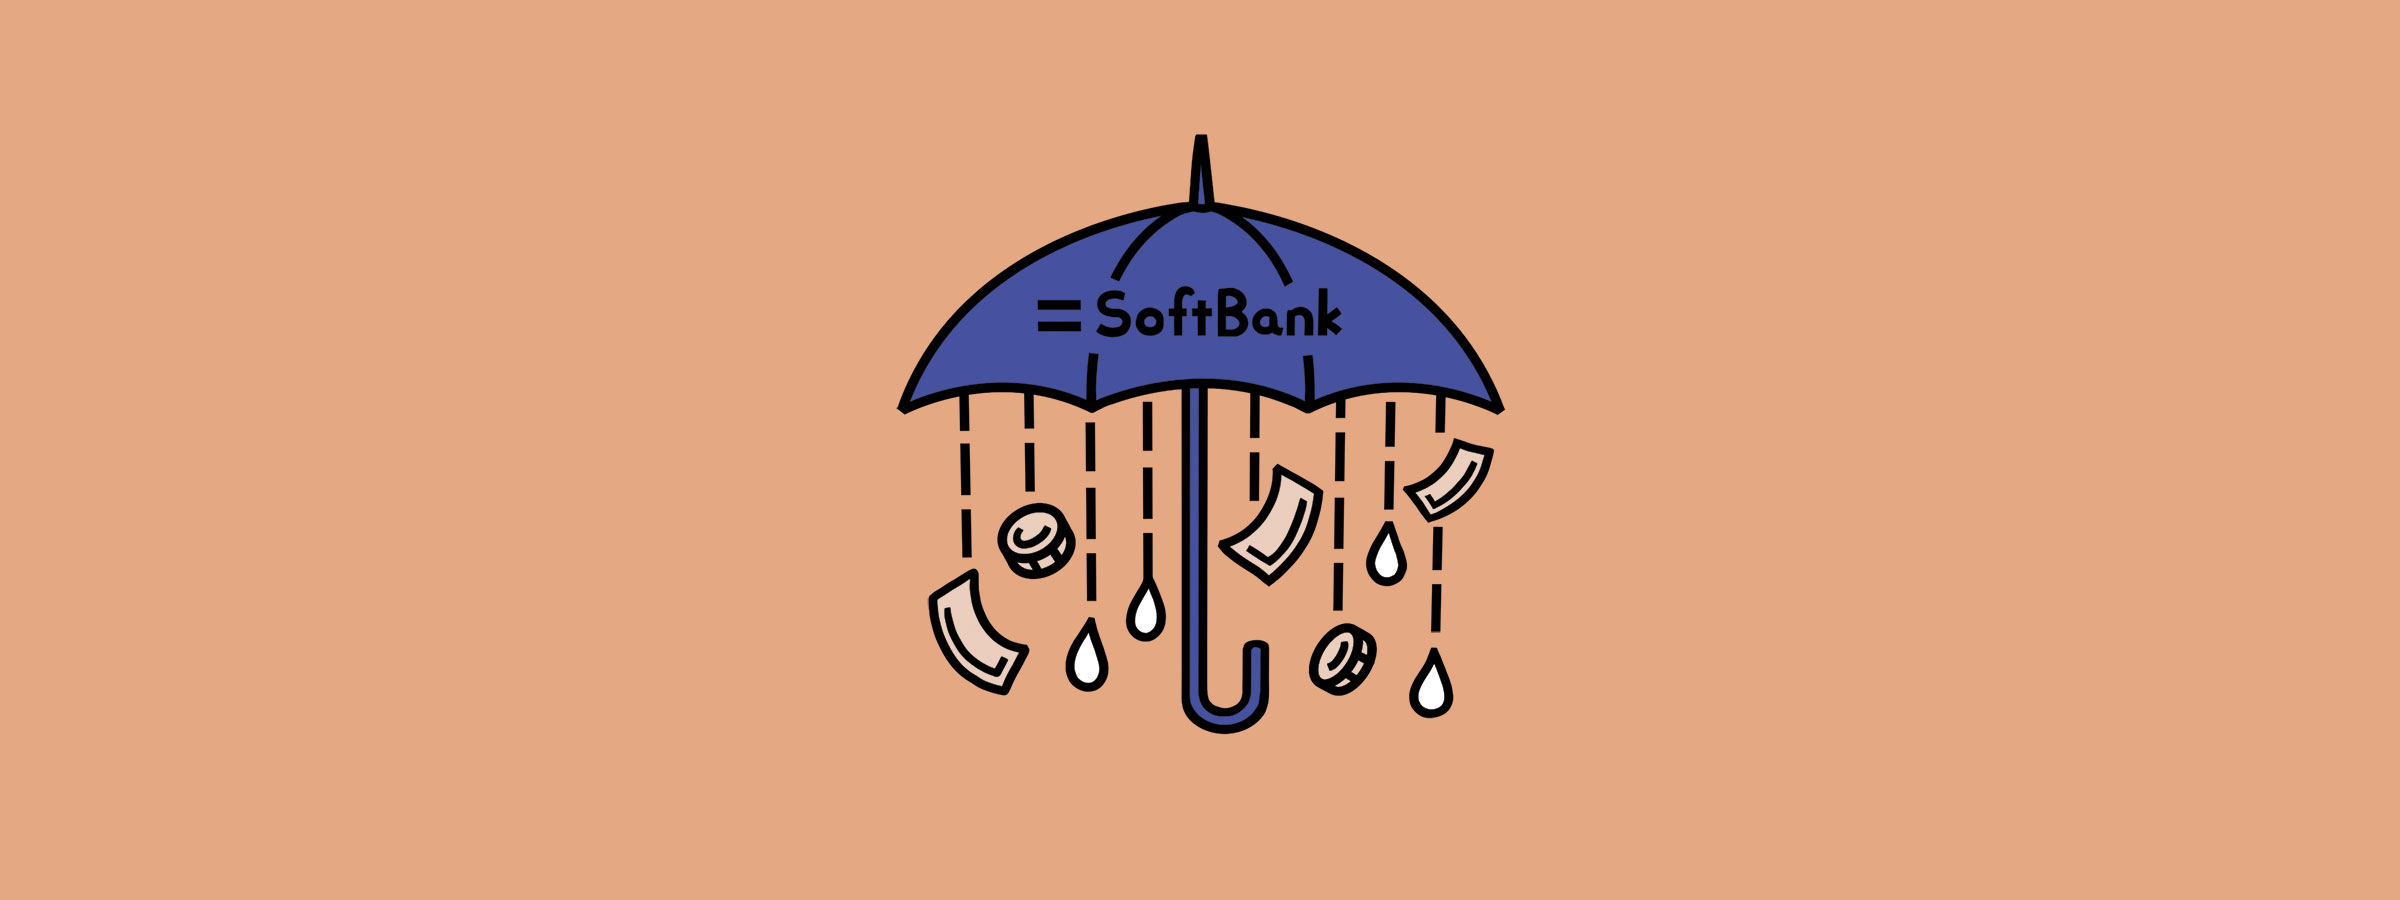 Softbank-time100-companies